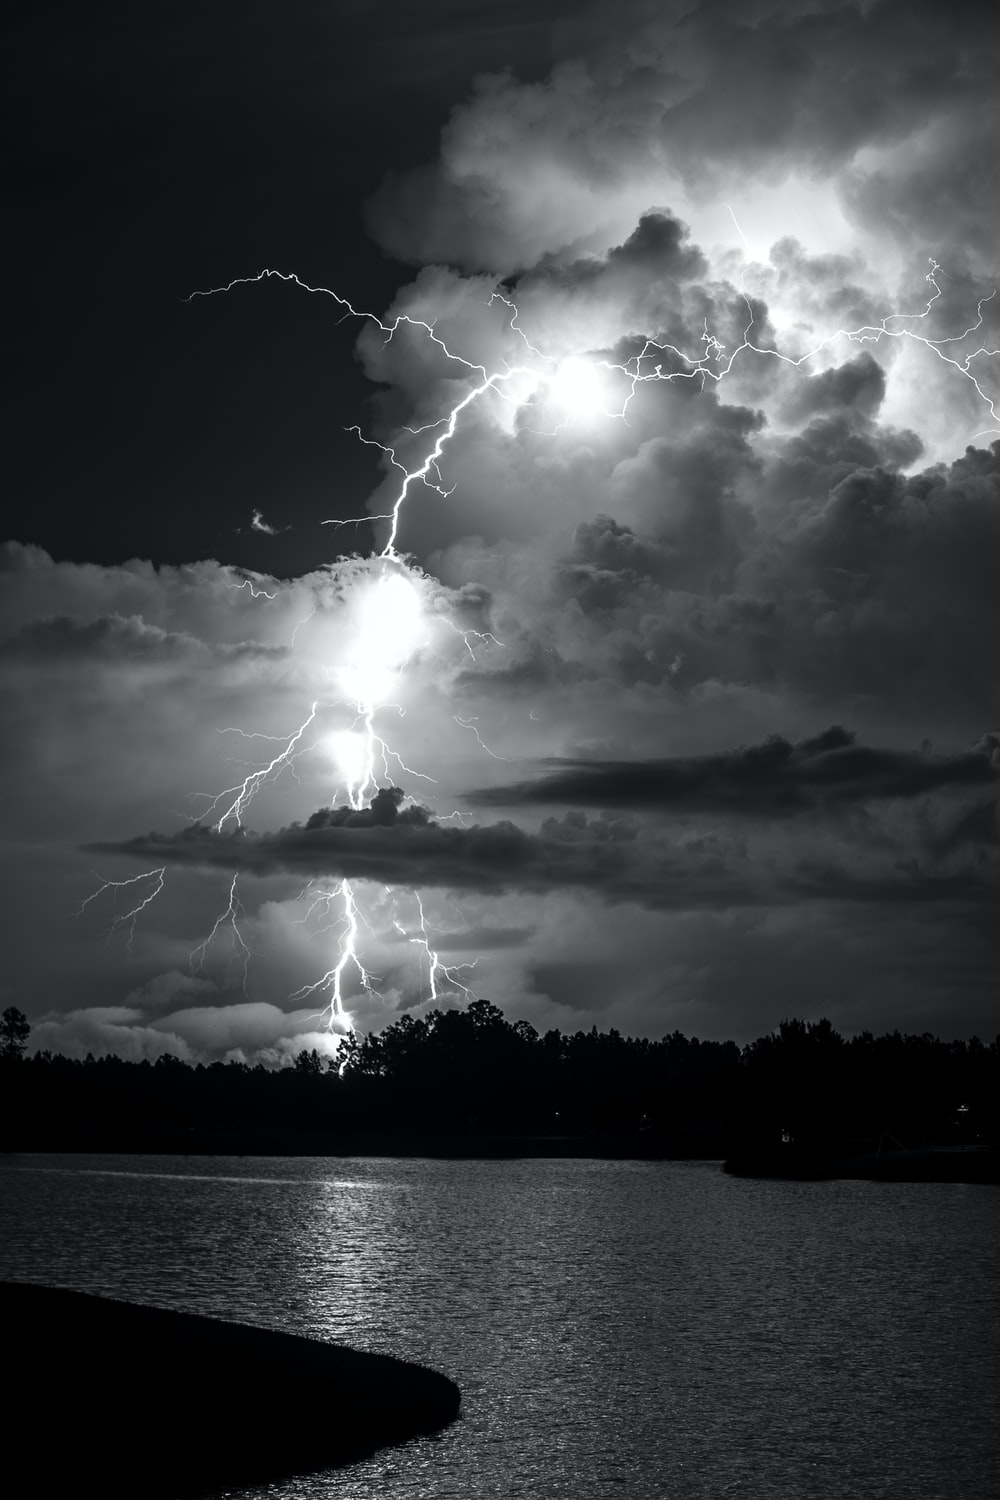 Lightning Image